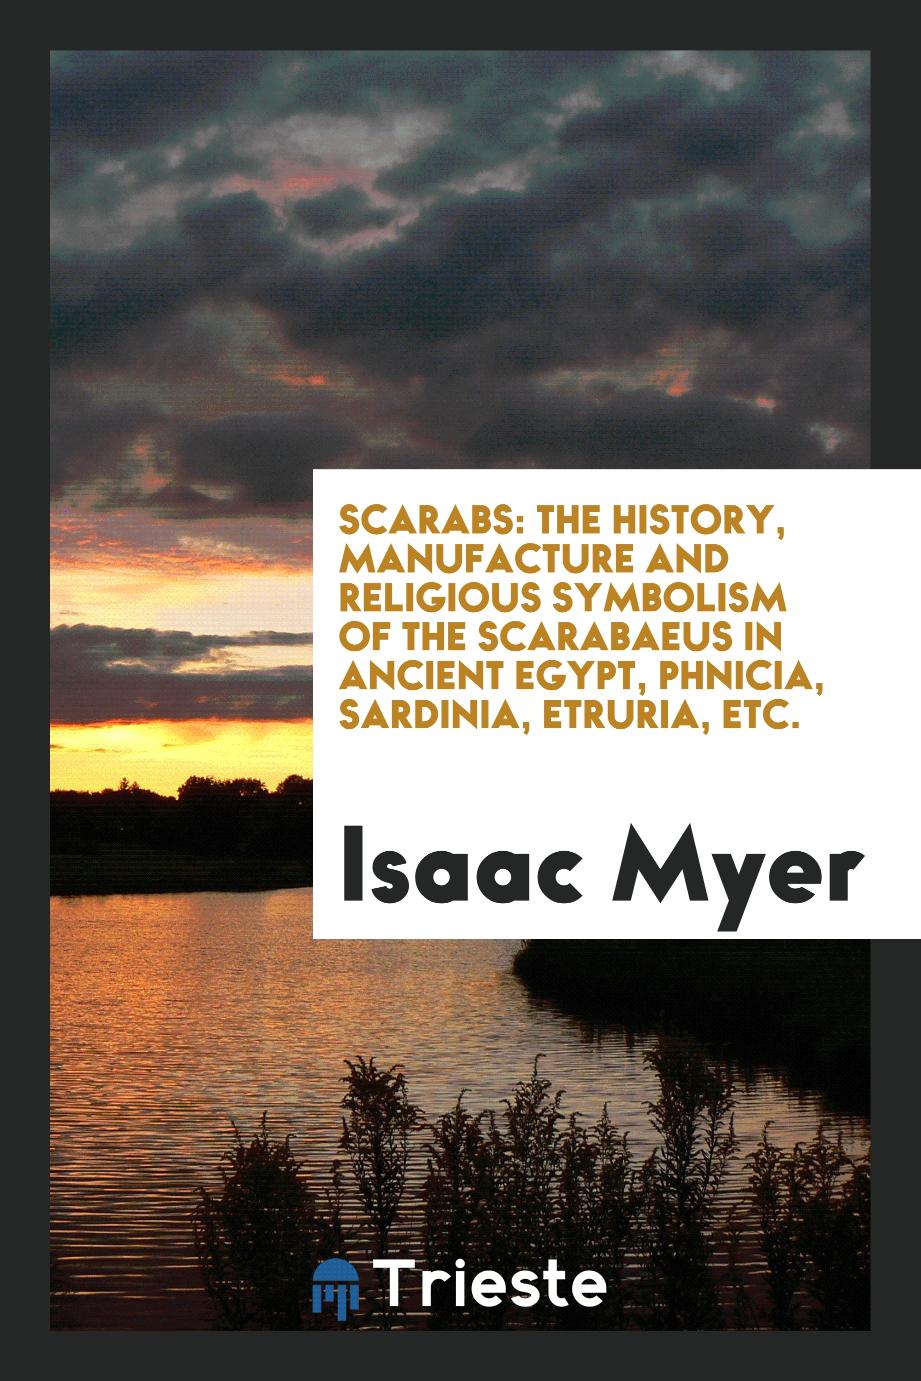 Scarabs: The History, Manufacture and Religious Symbolism of the Scarabaeus in Ancient Egypt, Phnicia, Sardinia, Etruria, Etc.